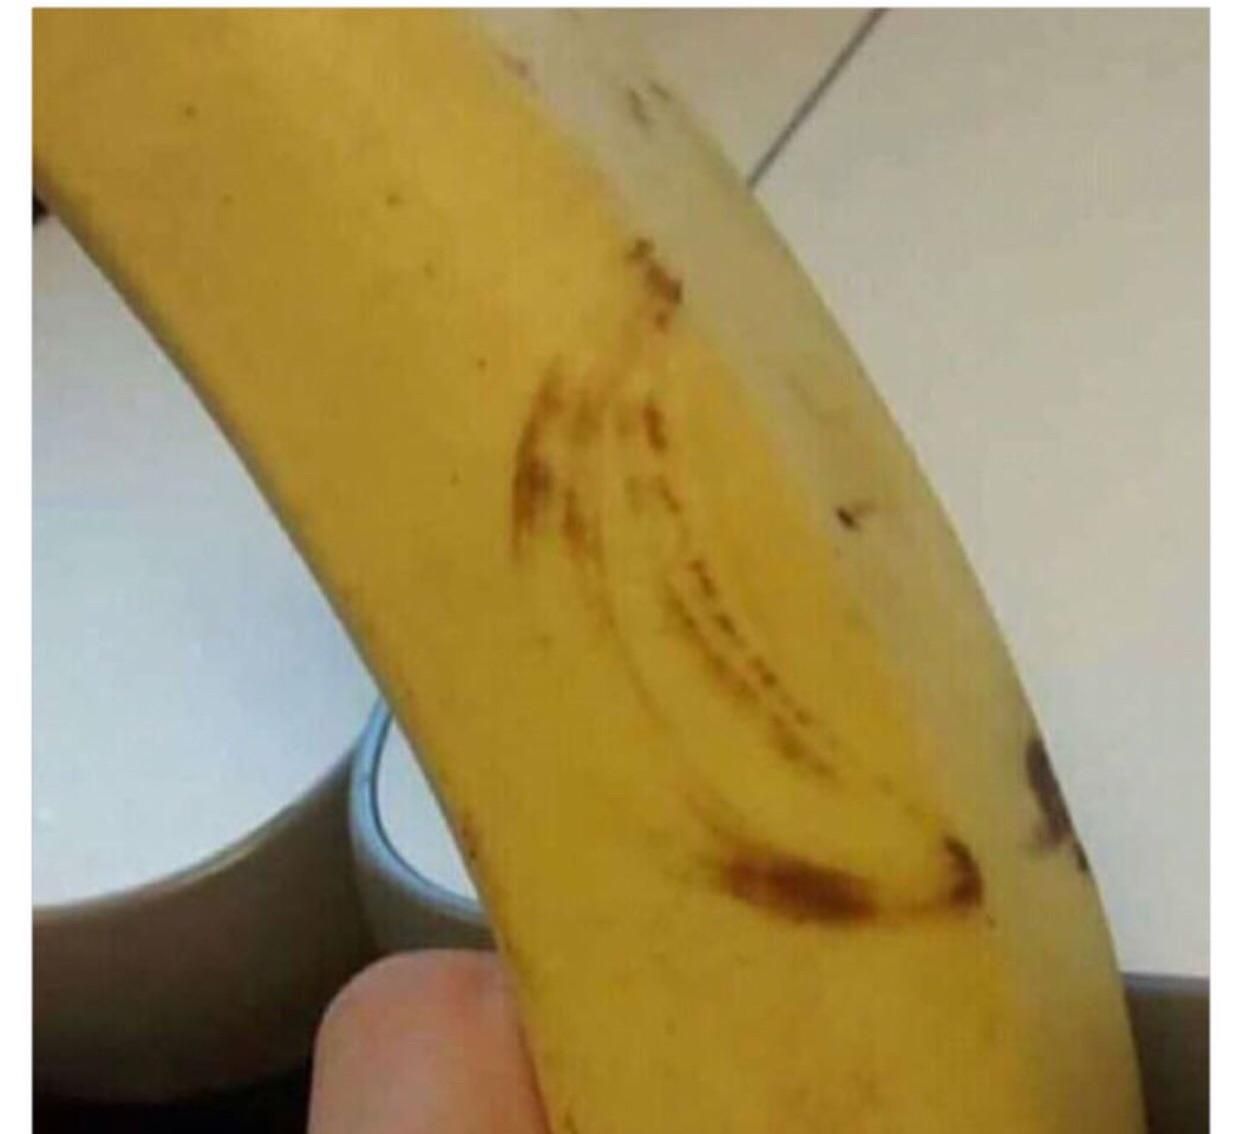 Bananaception